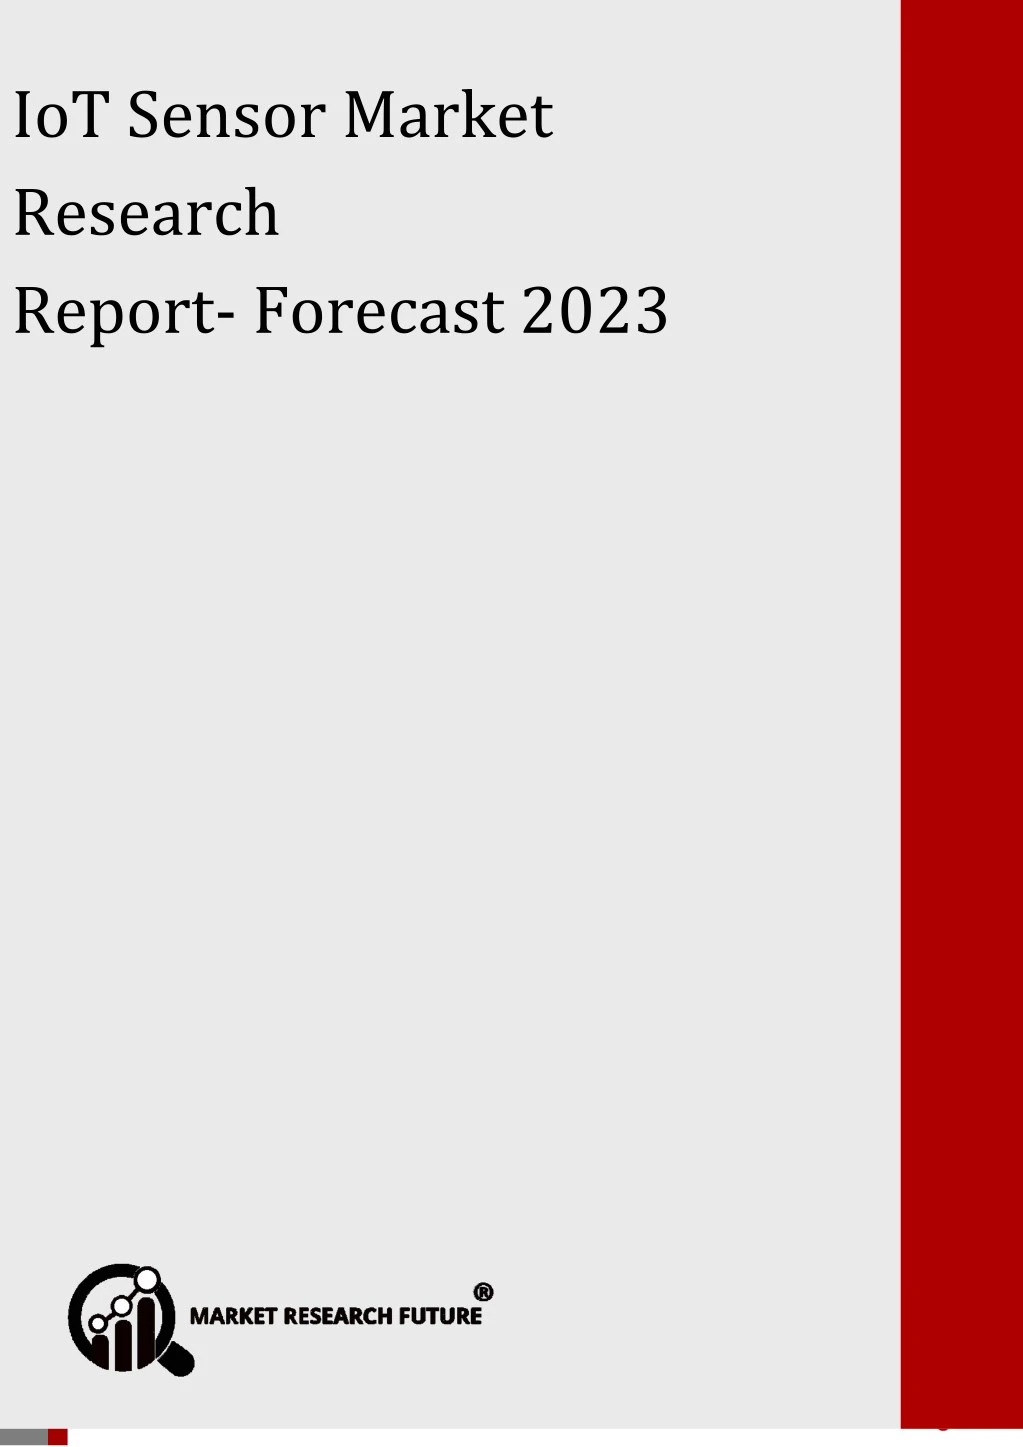 iot sensor market research report forecast 2023